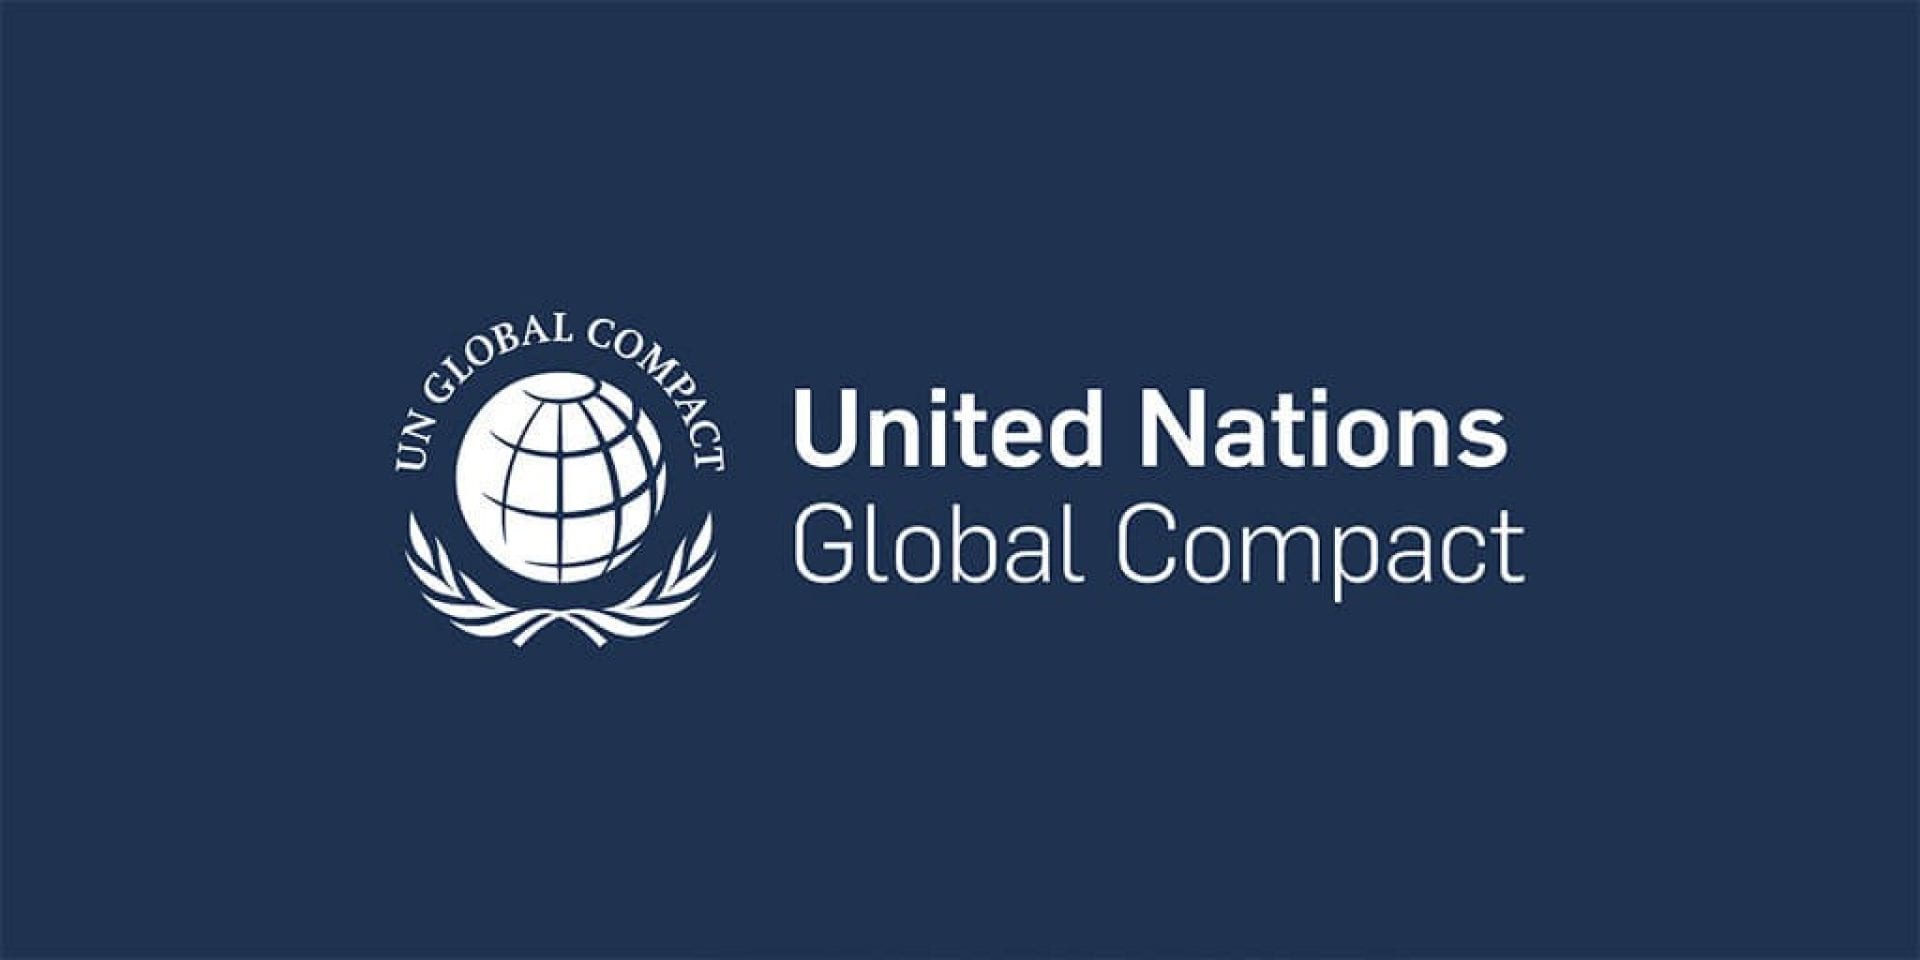 Hilti joins UN Global Compact